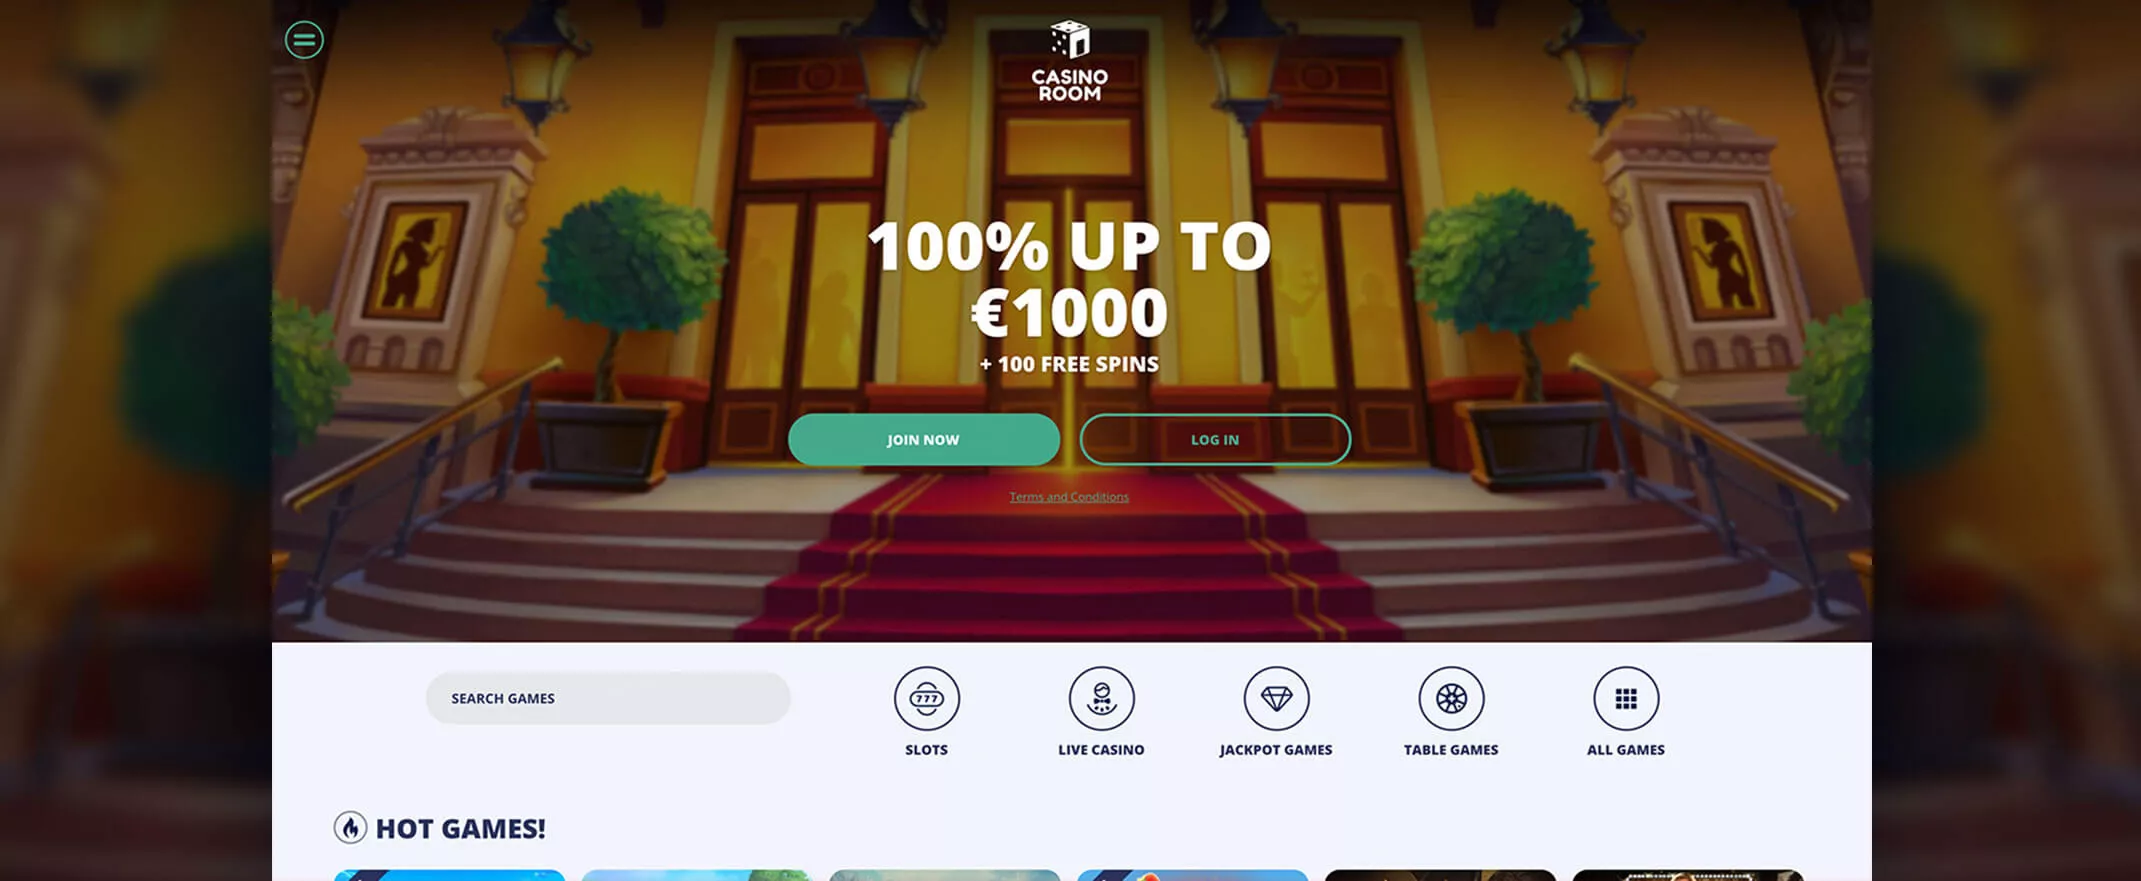 Casino Room screenshot of the homepage